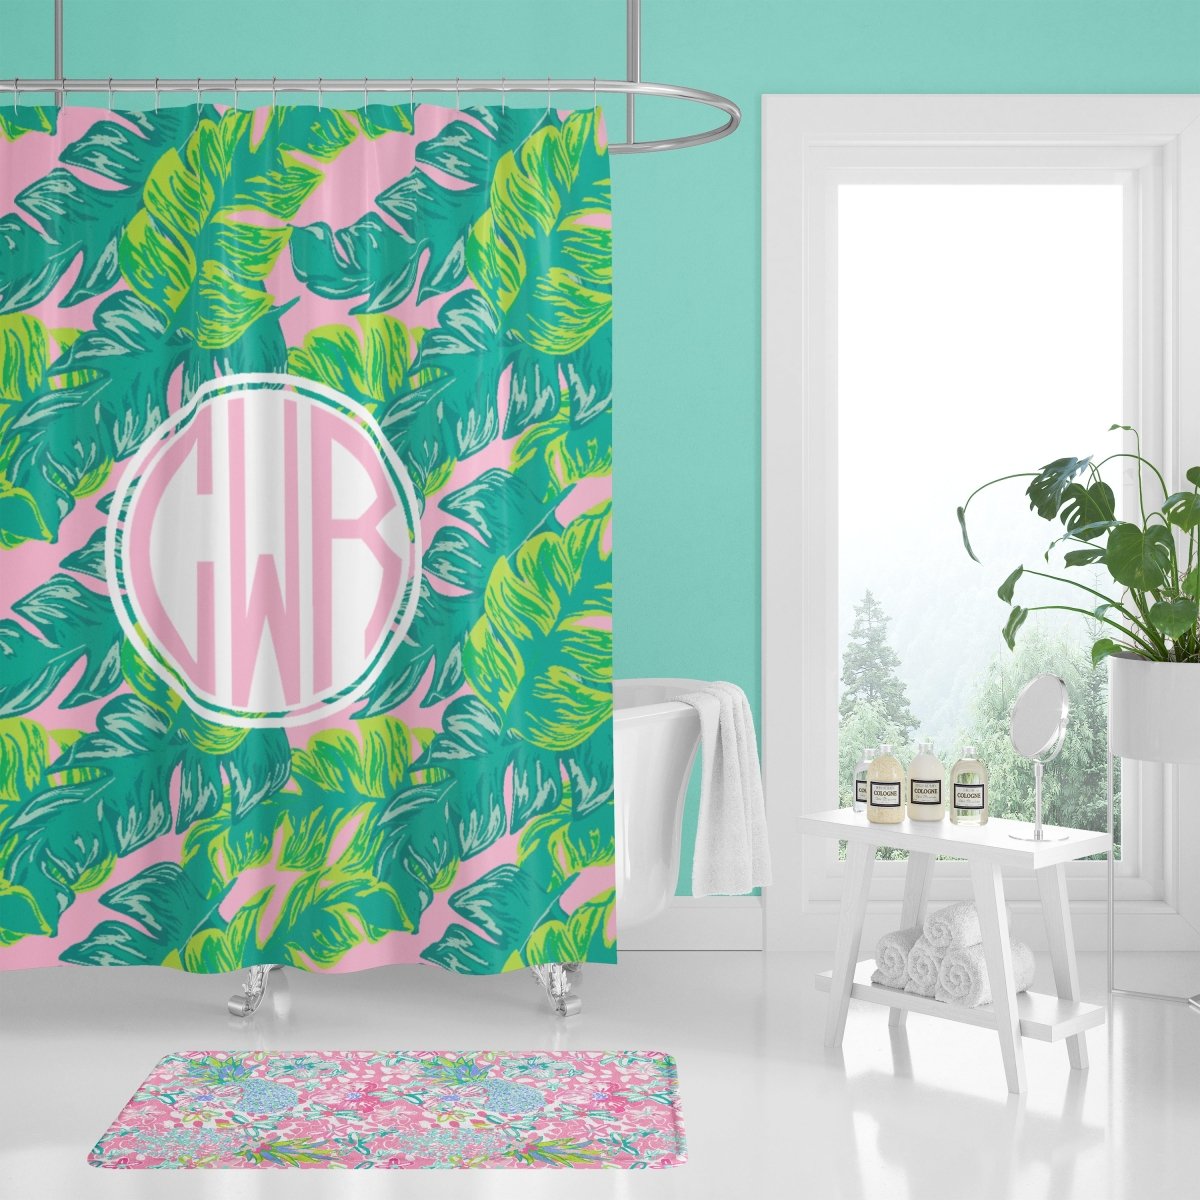 Preppy Summer Palm Bathroom Collection - gender_girl, Preppy Summer, Theme_Tropical